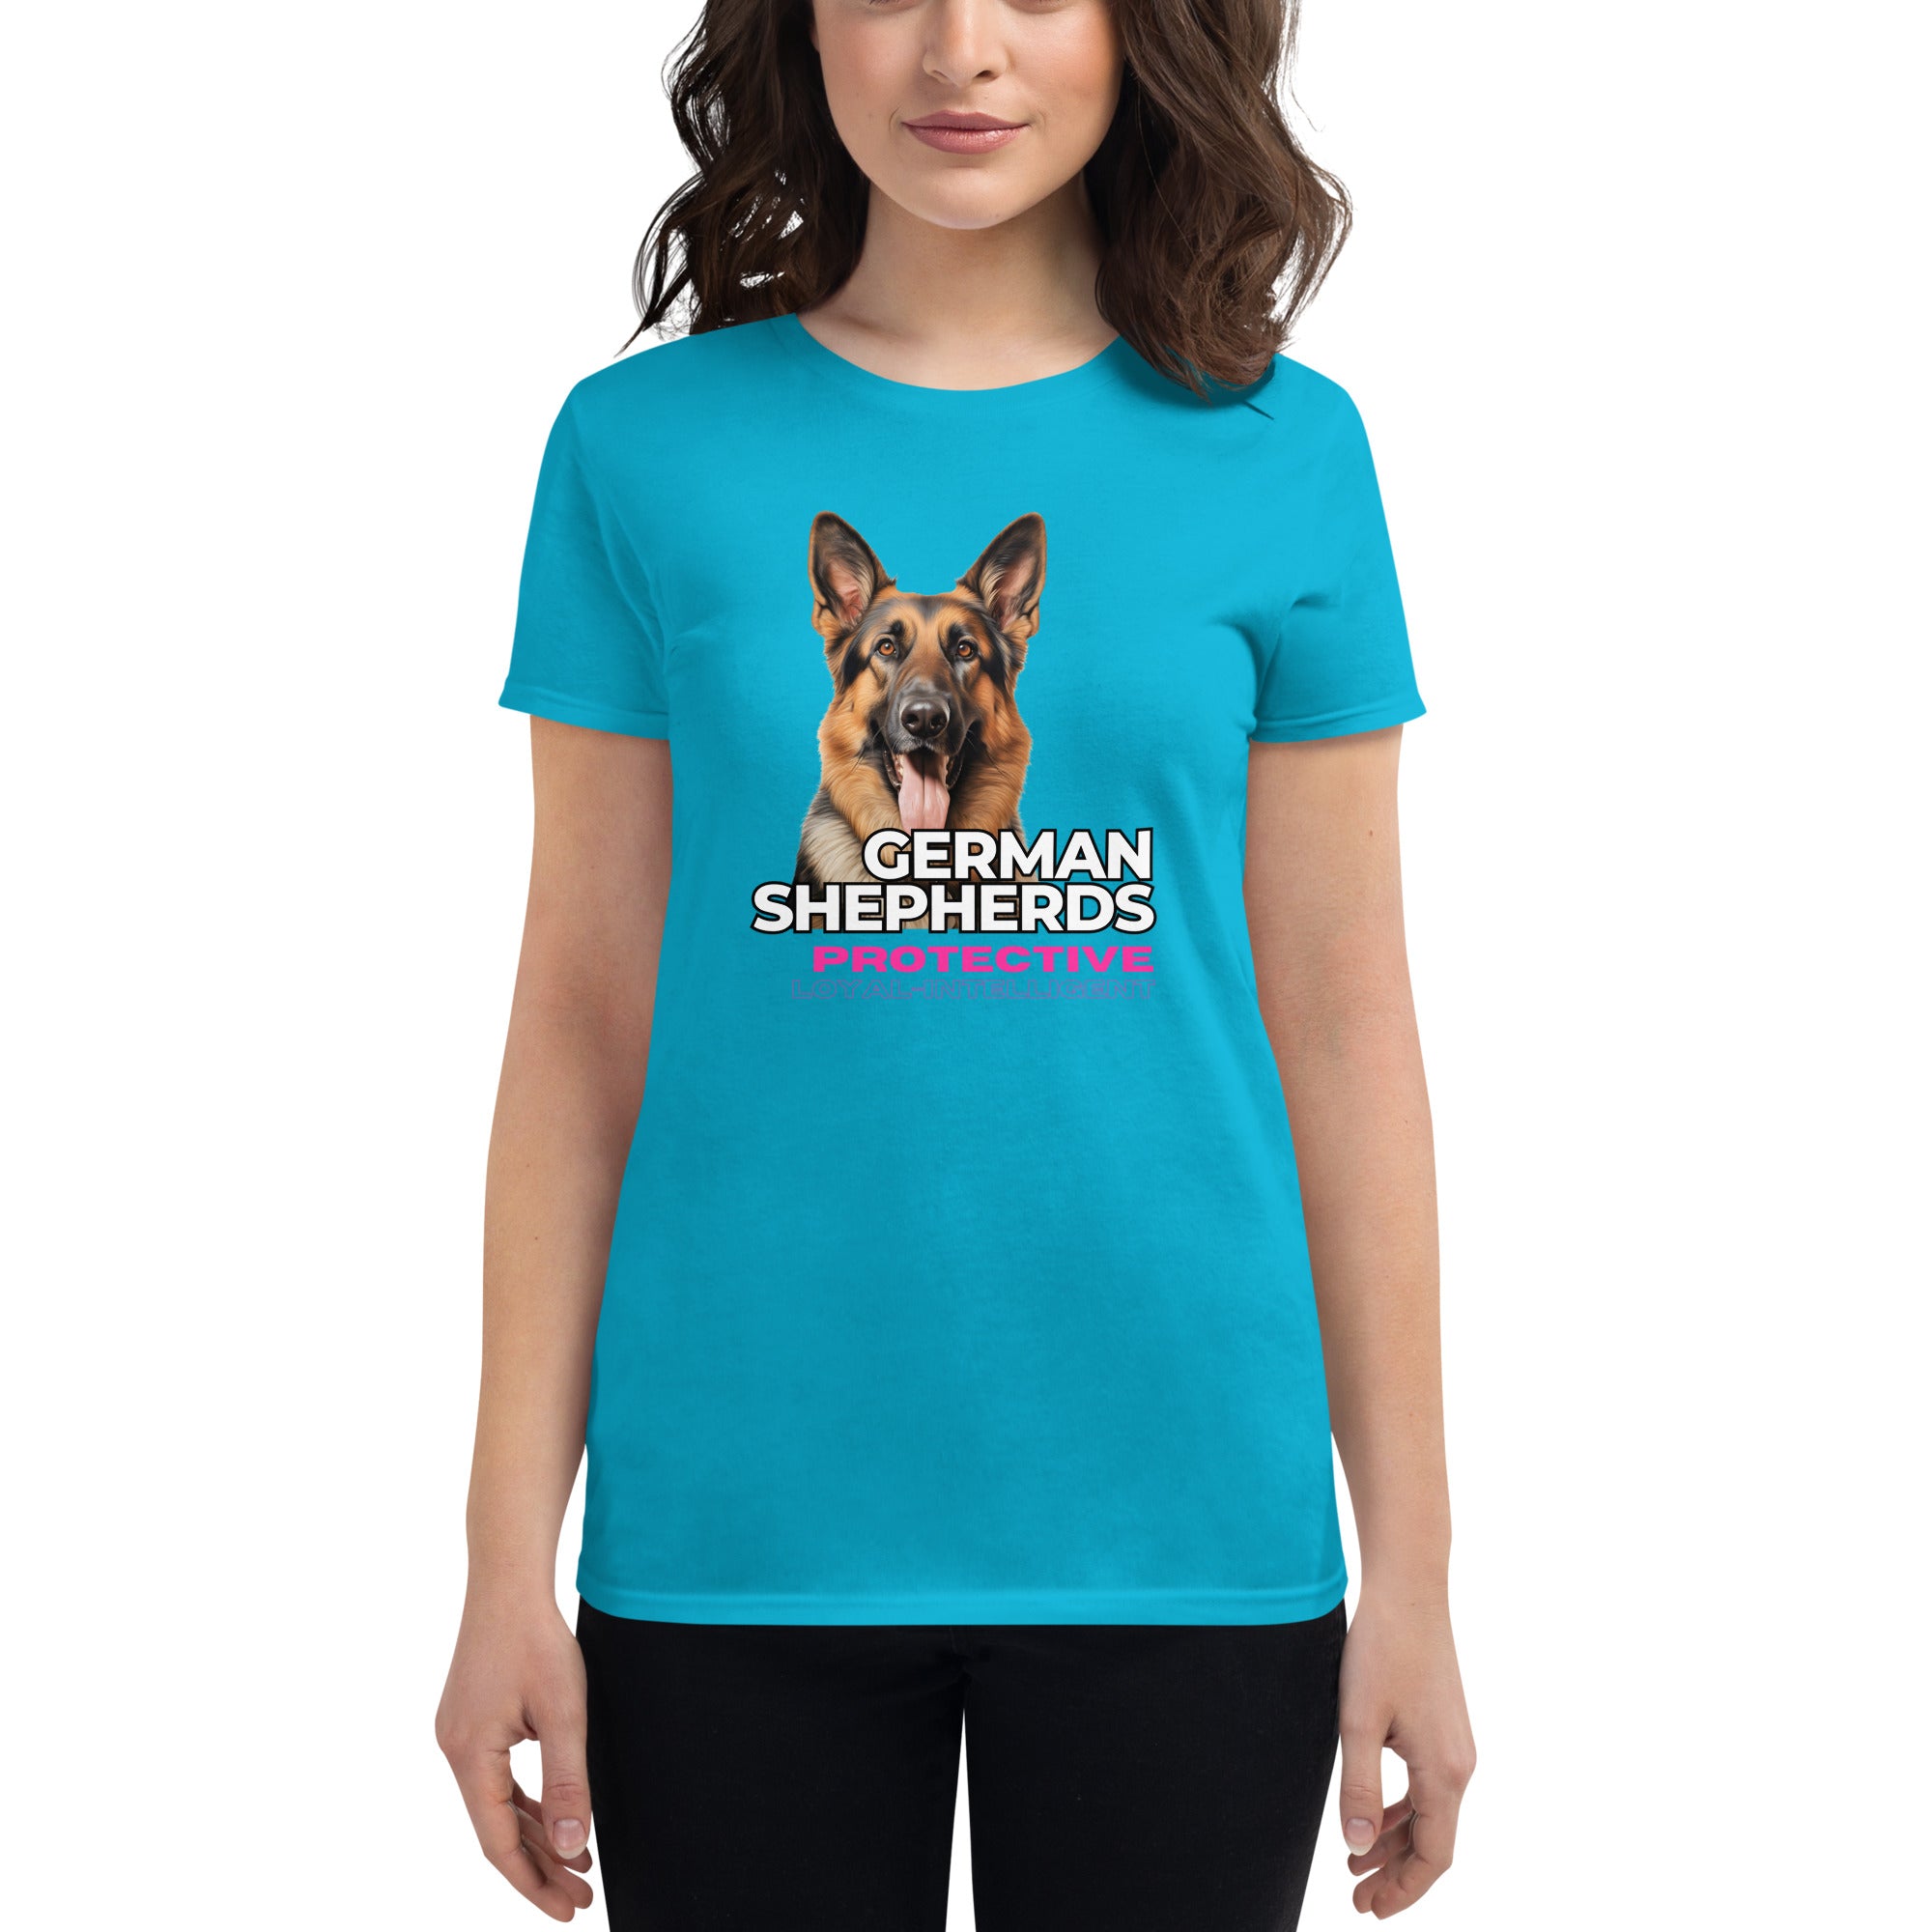 German Shepherd Women's short sleeve t-shirt